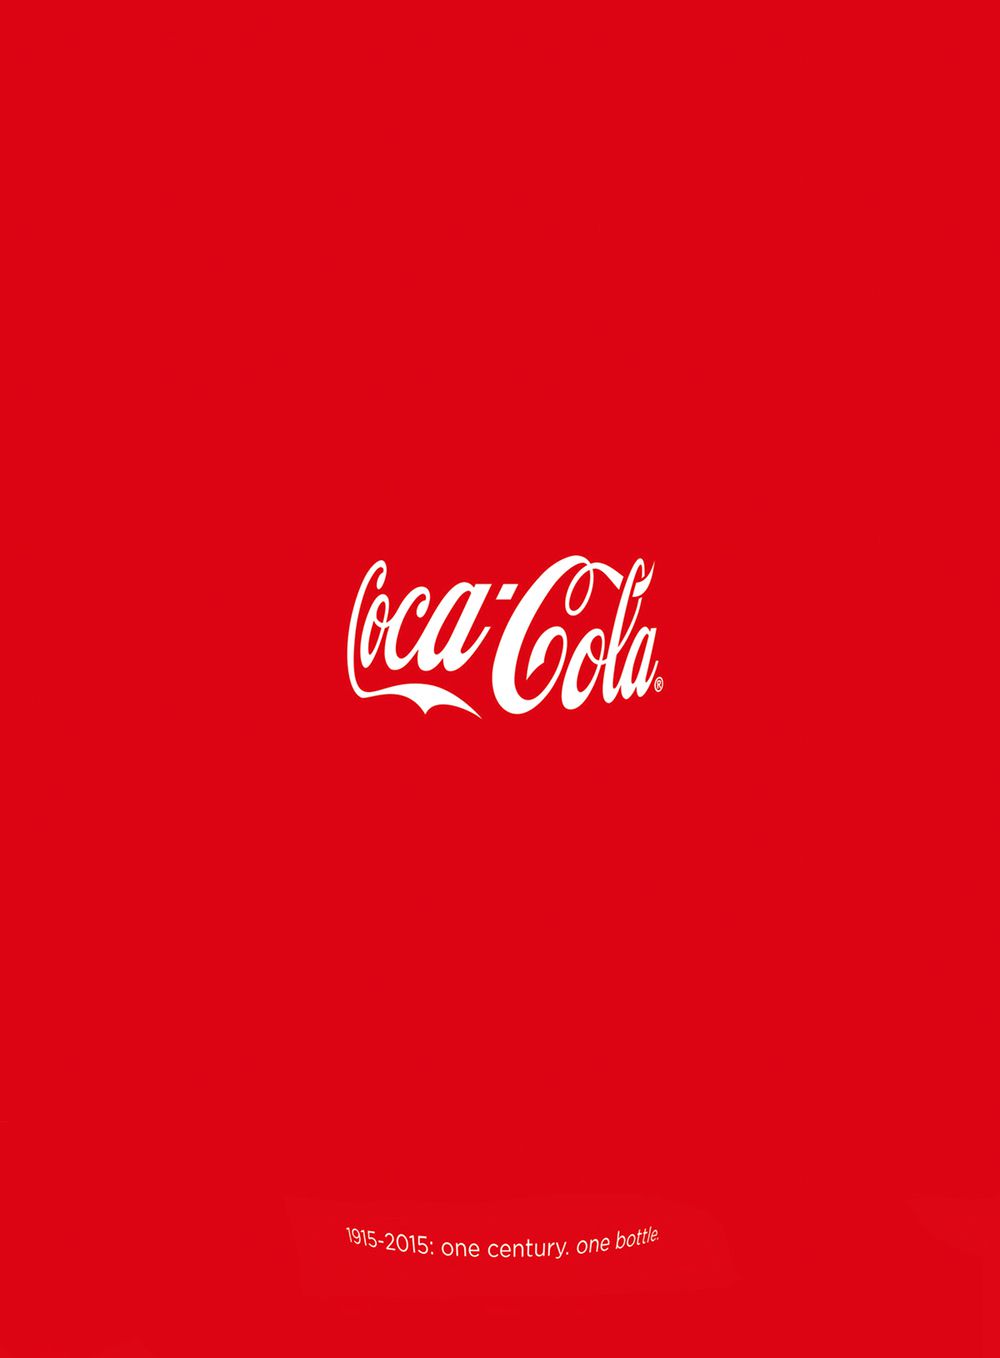 Esra-Gulmen-Coca-Cola-Icon-of-the-Century.jpg